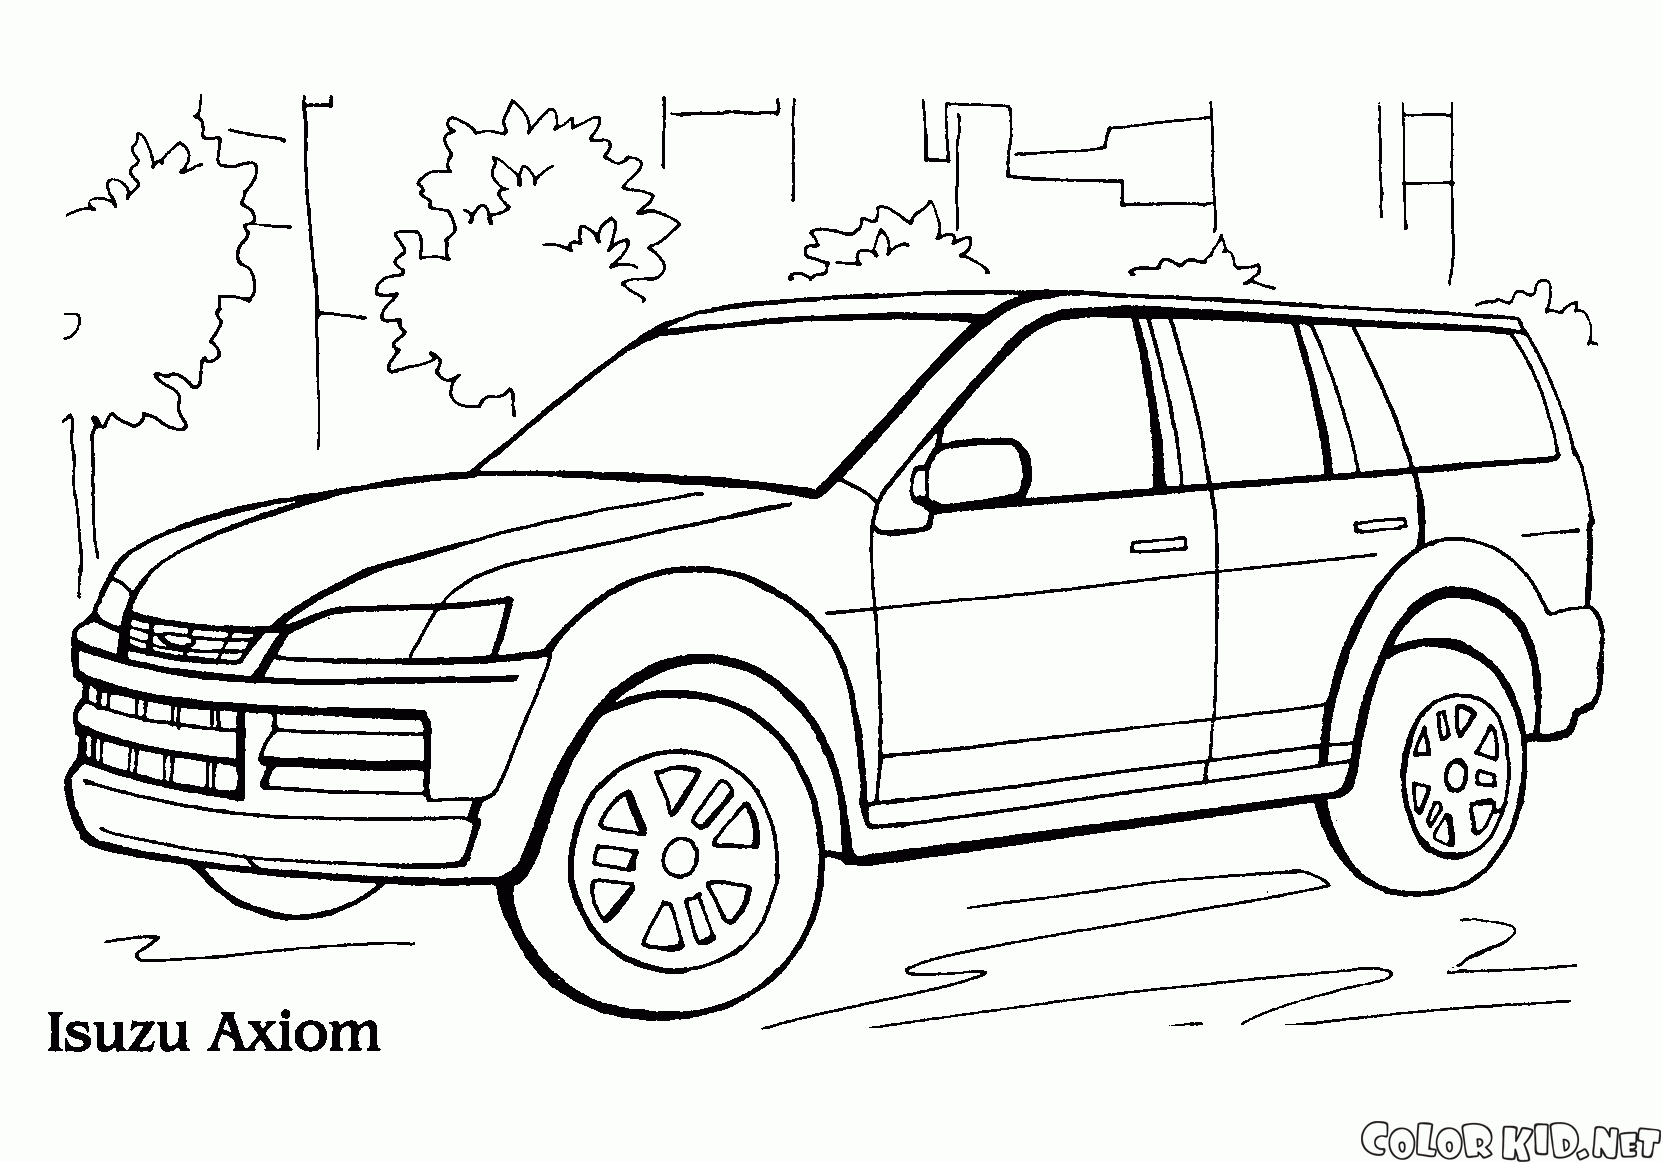 Axiom wagon